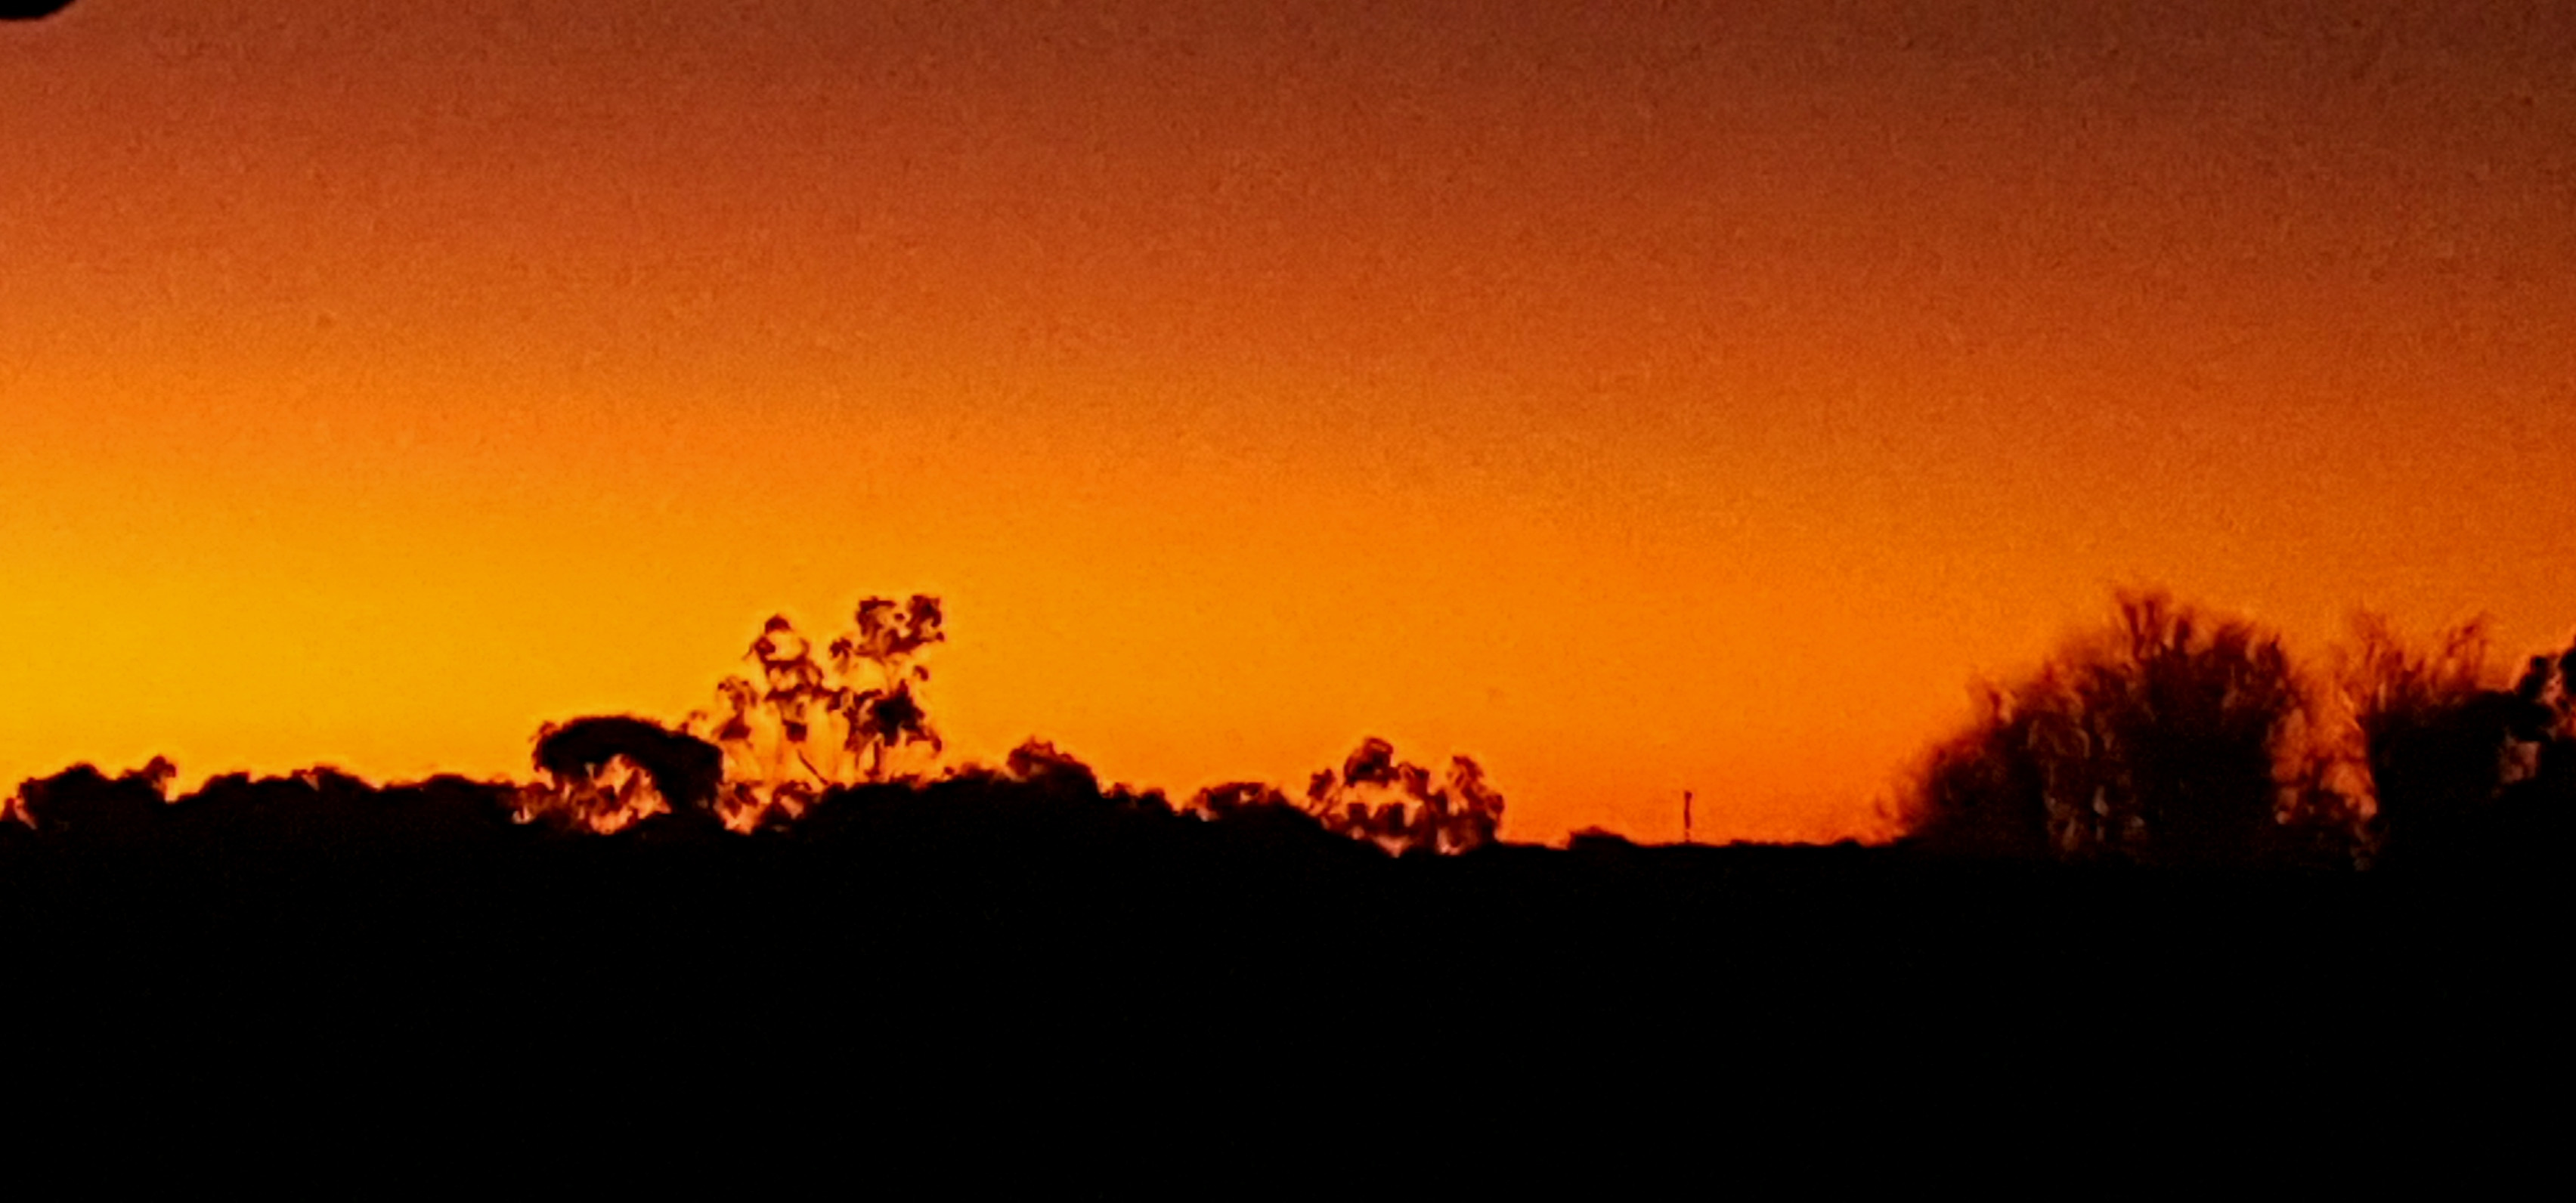 Sunset on the way to Bathurst